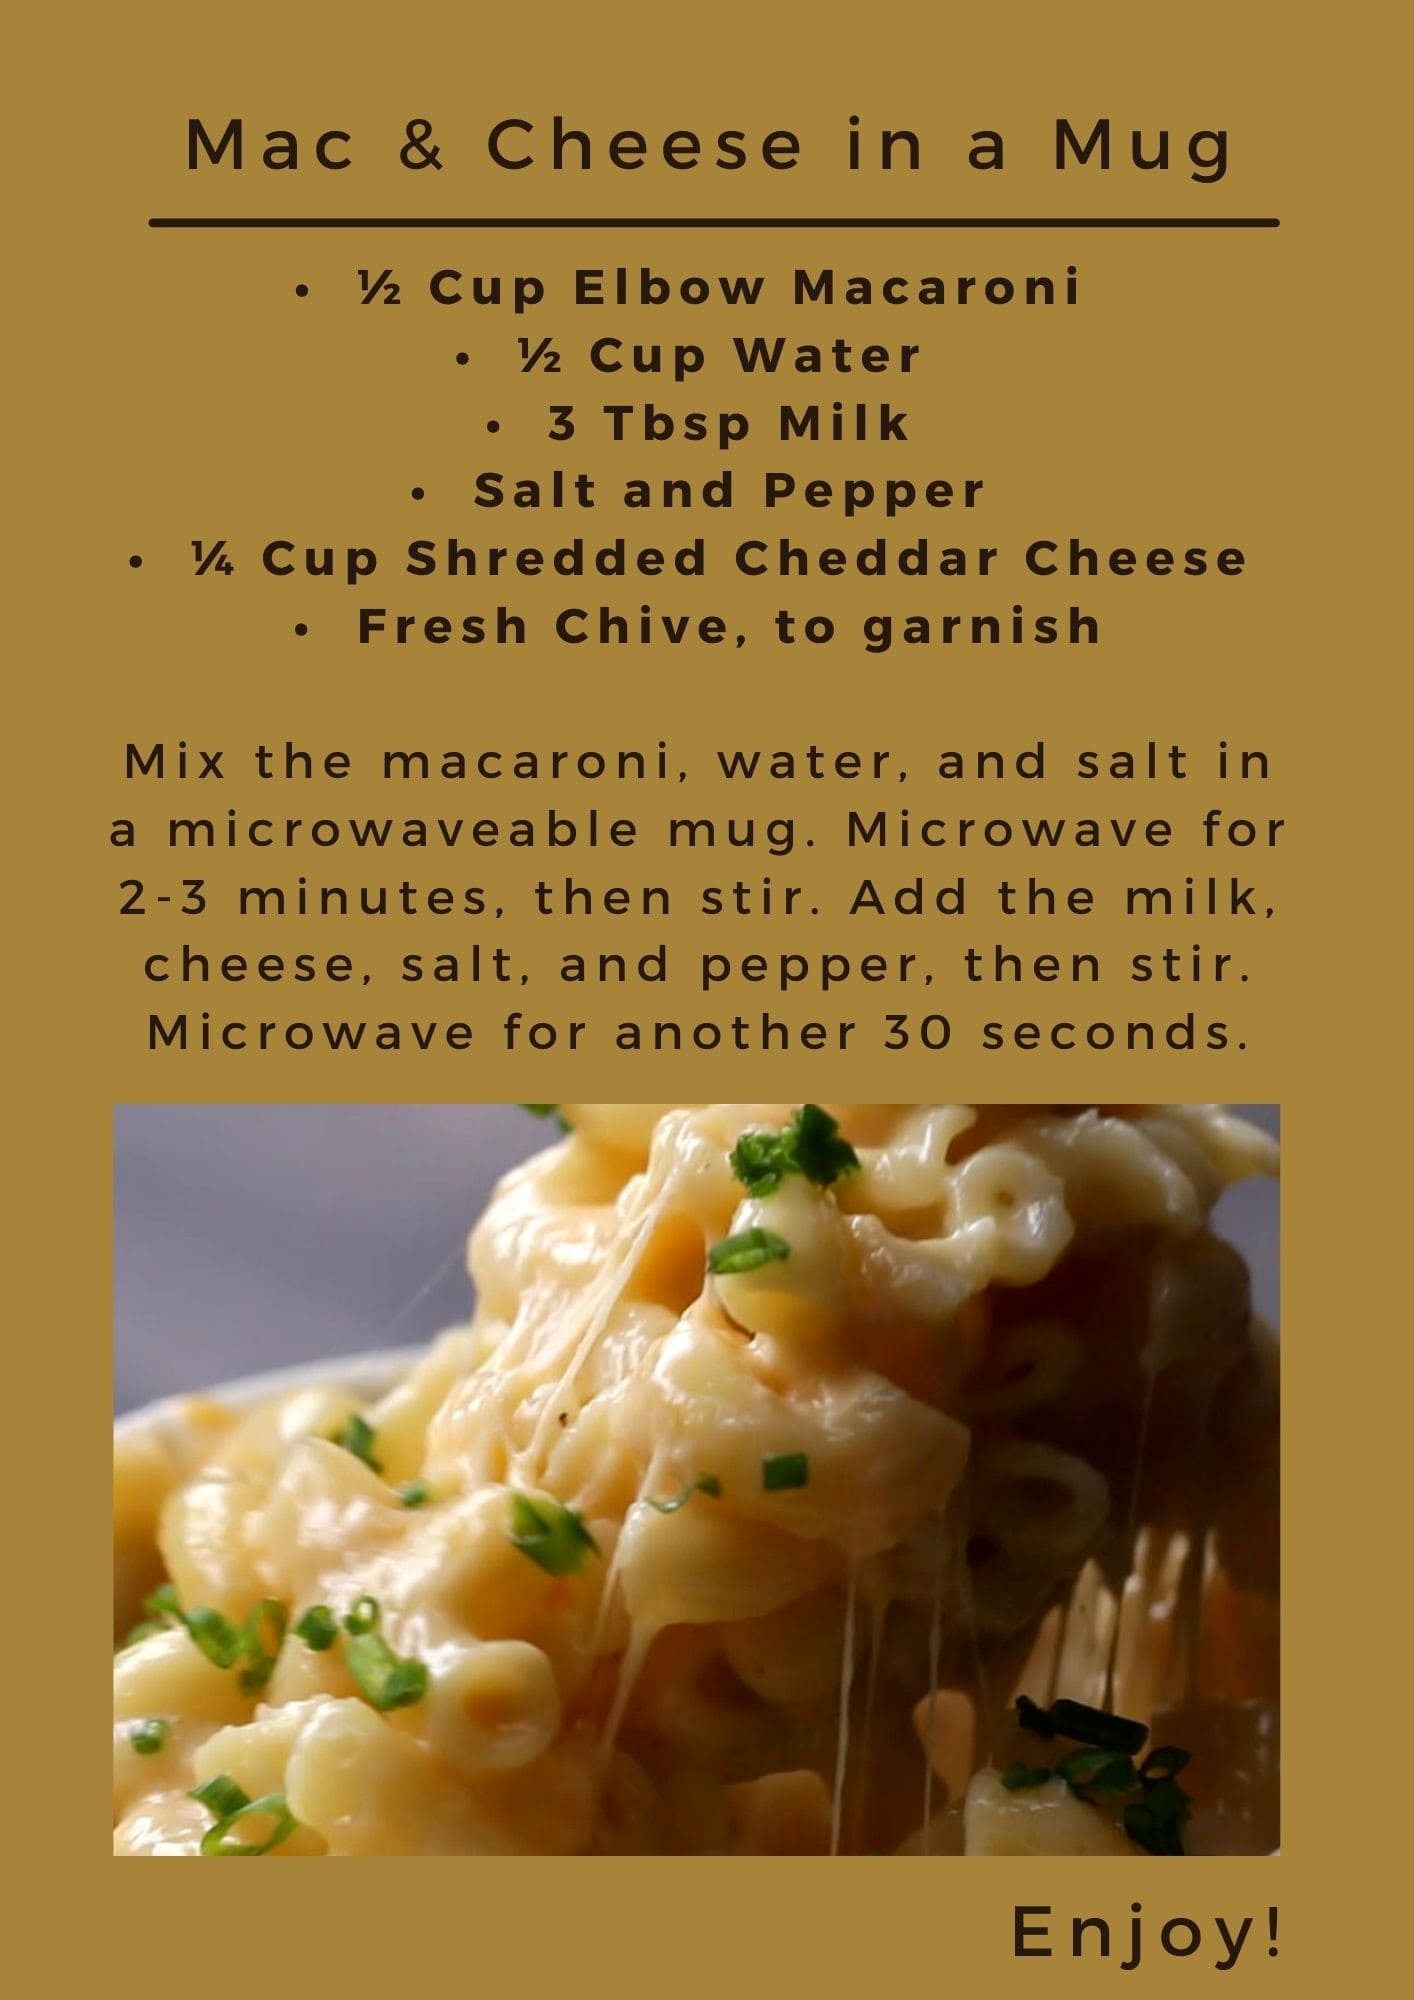 Mac & Cheese in a Mug